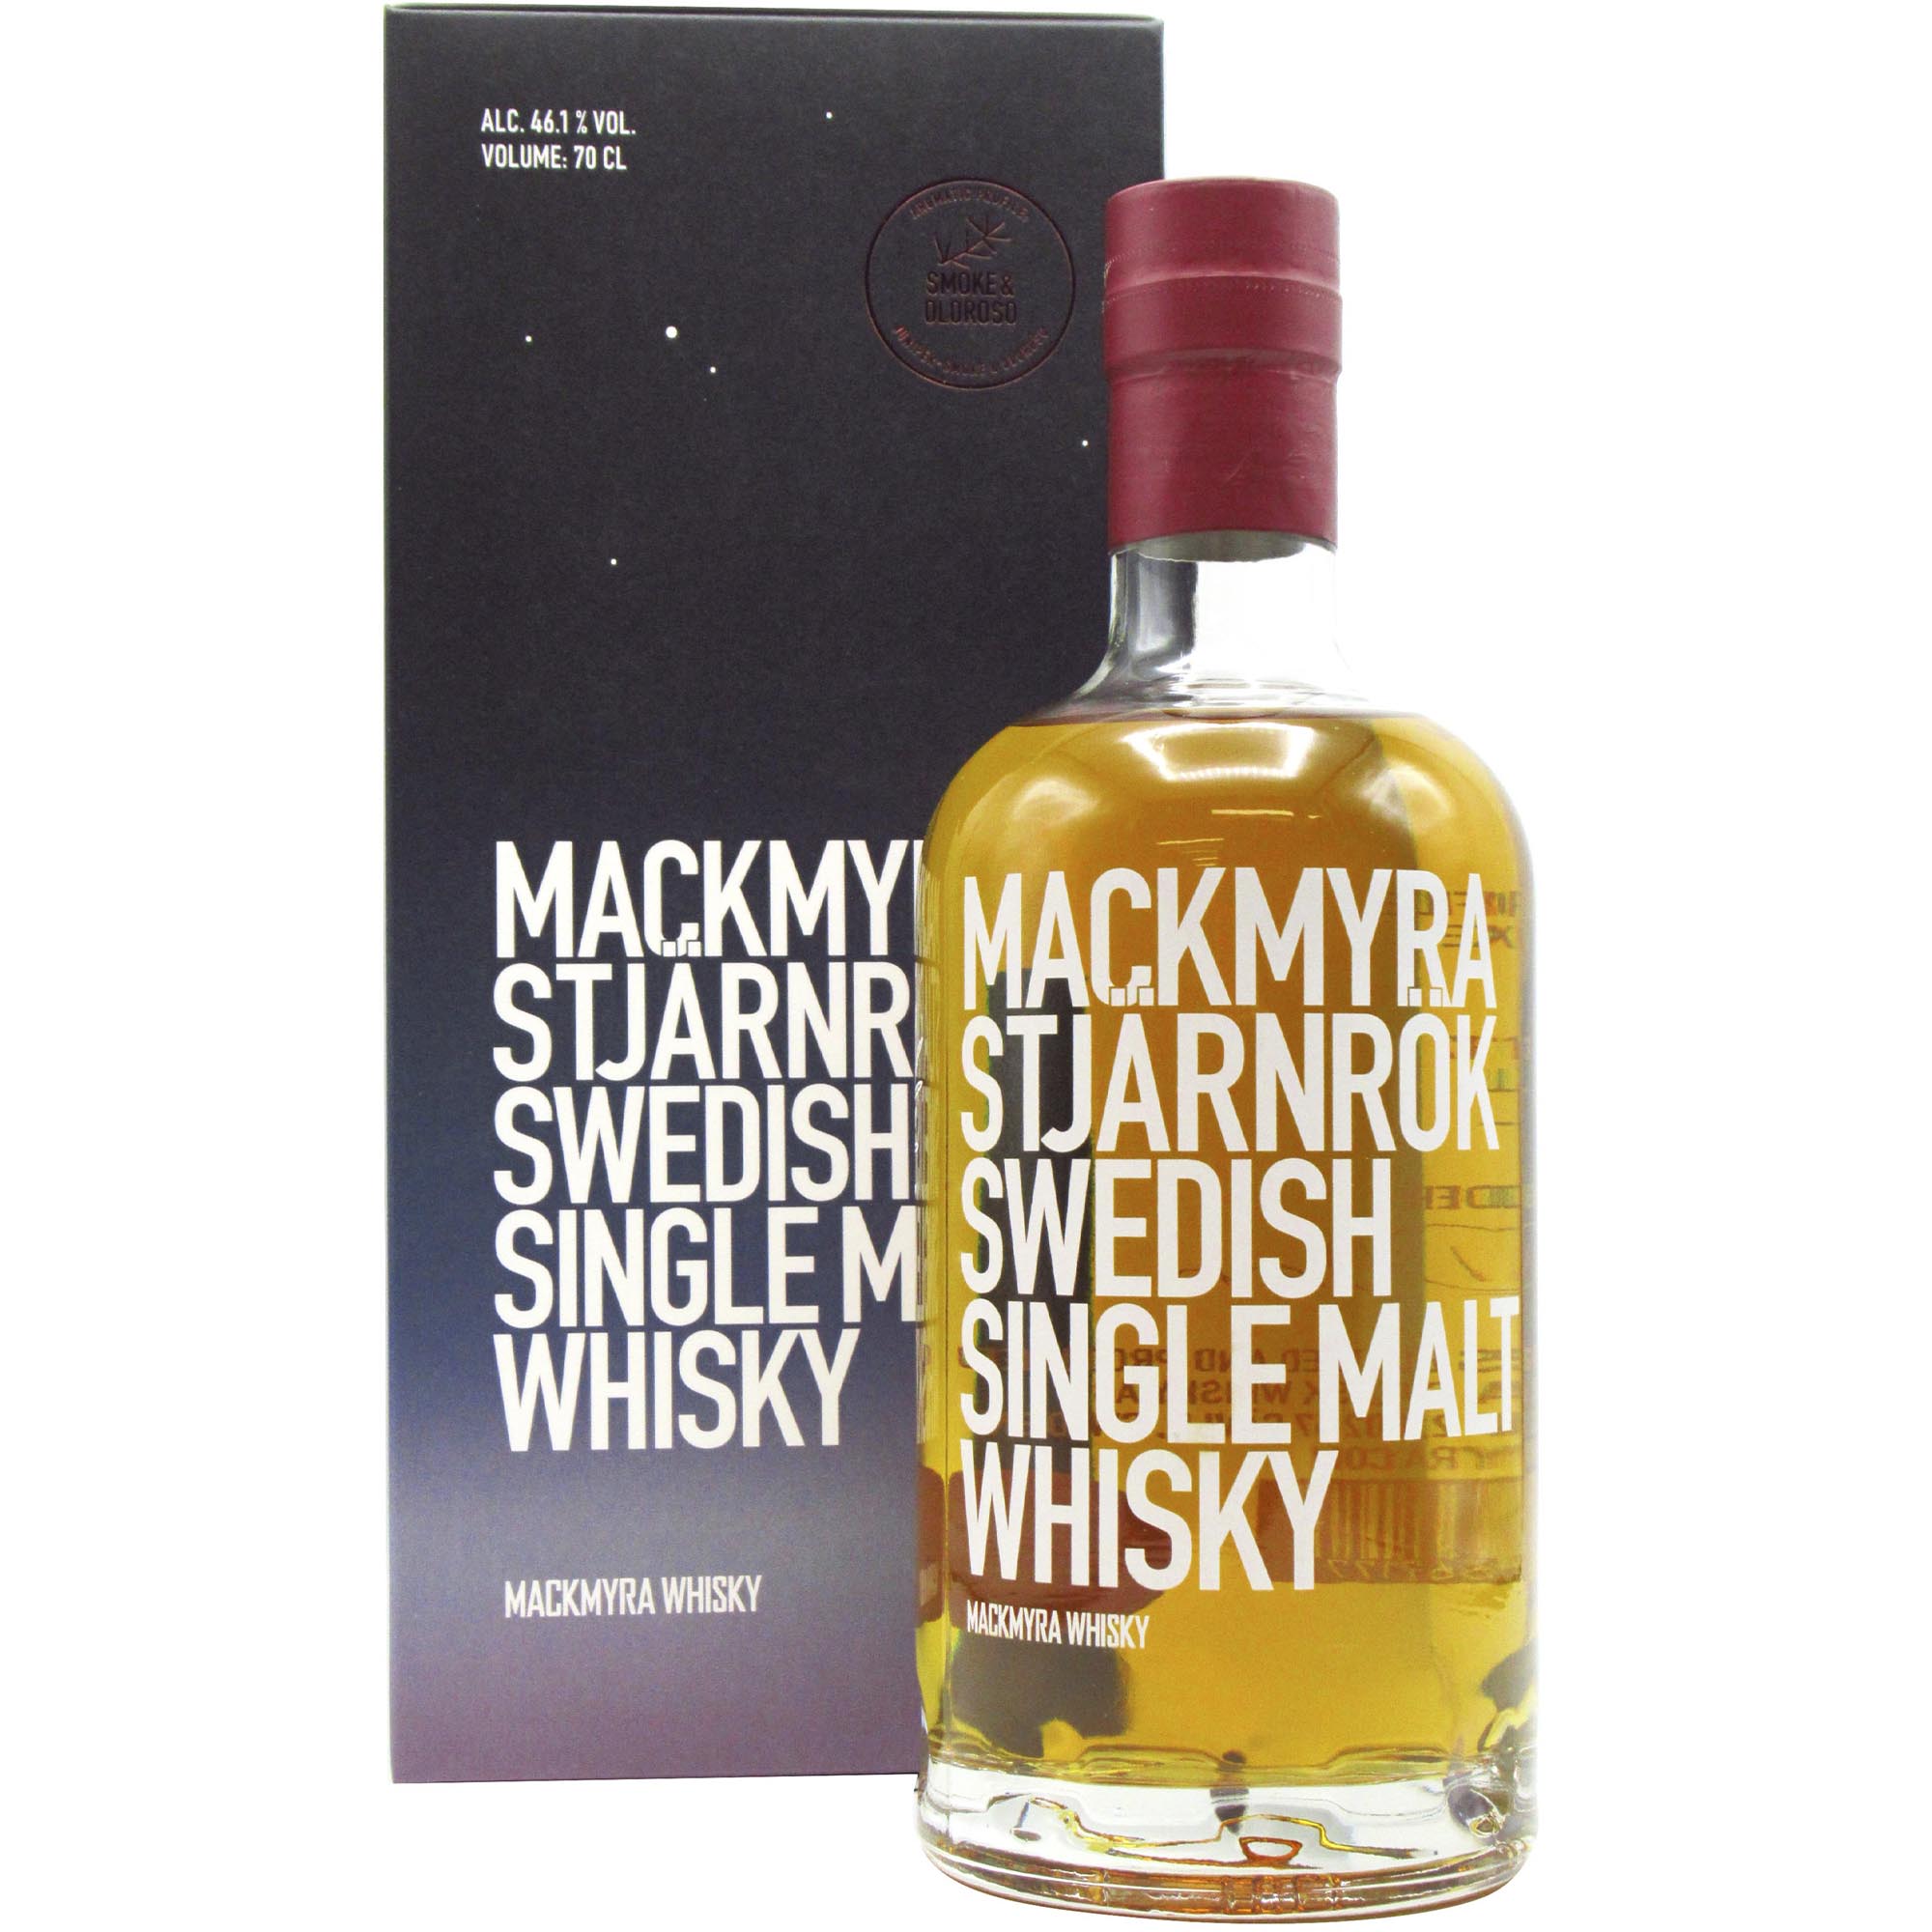 Віскі Mackmyra Stjarnrok Single Malt Swedish Whisky 46,1% 0.7 л - фото 1